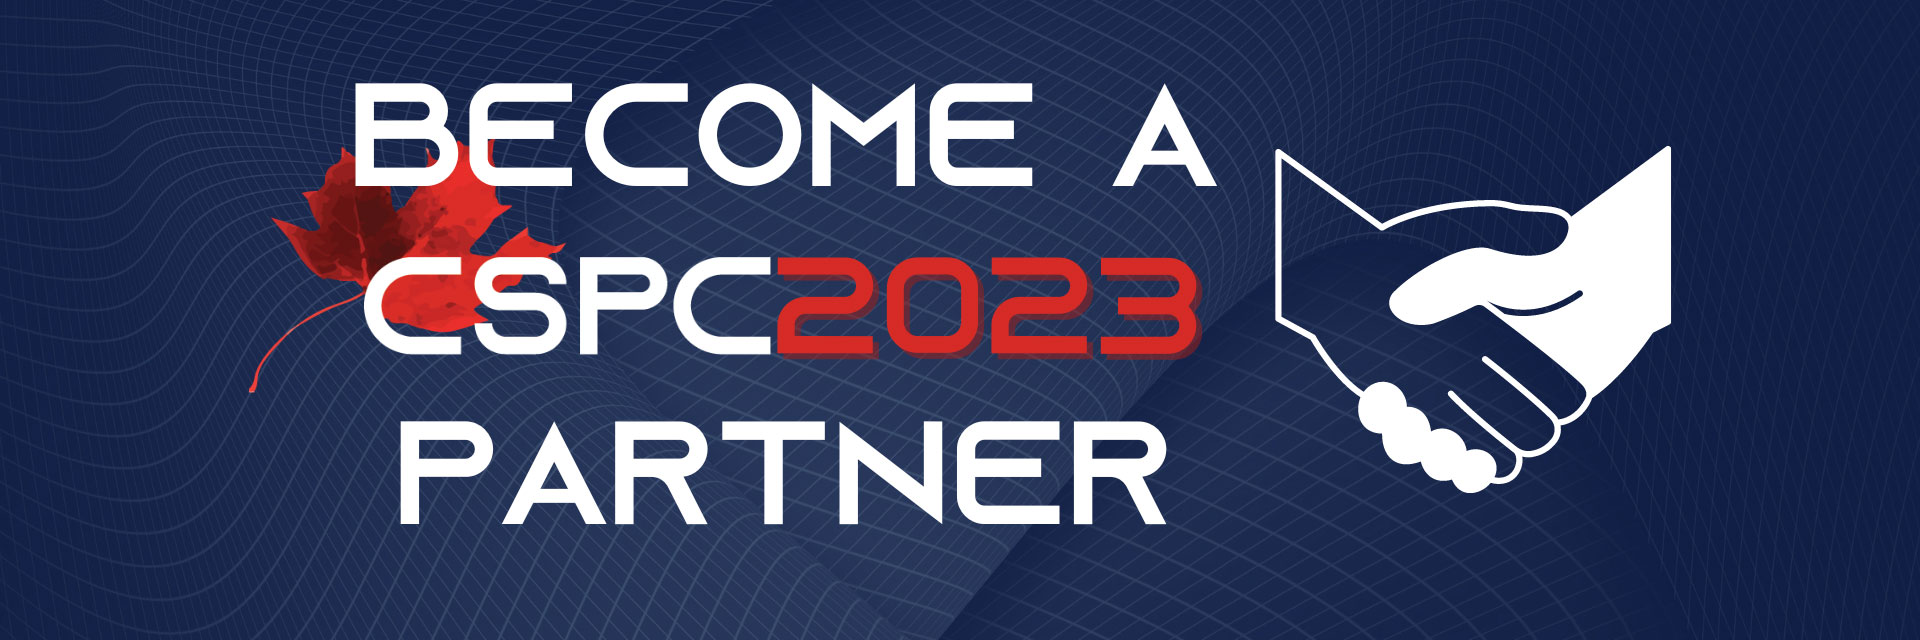 become a partner cspc2023 banner